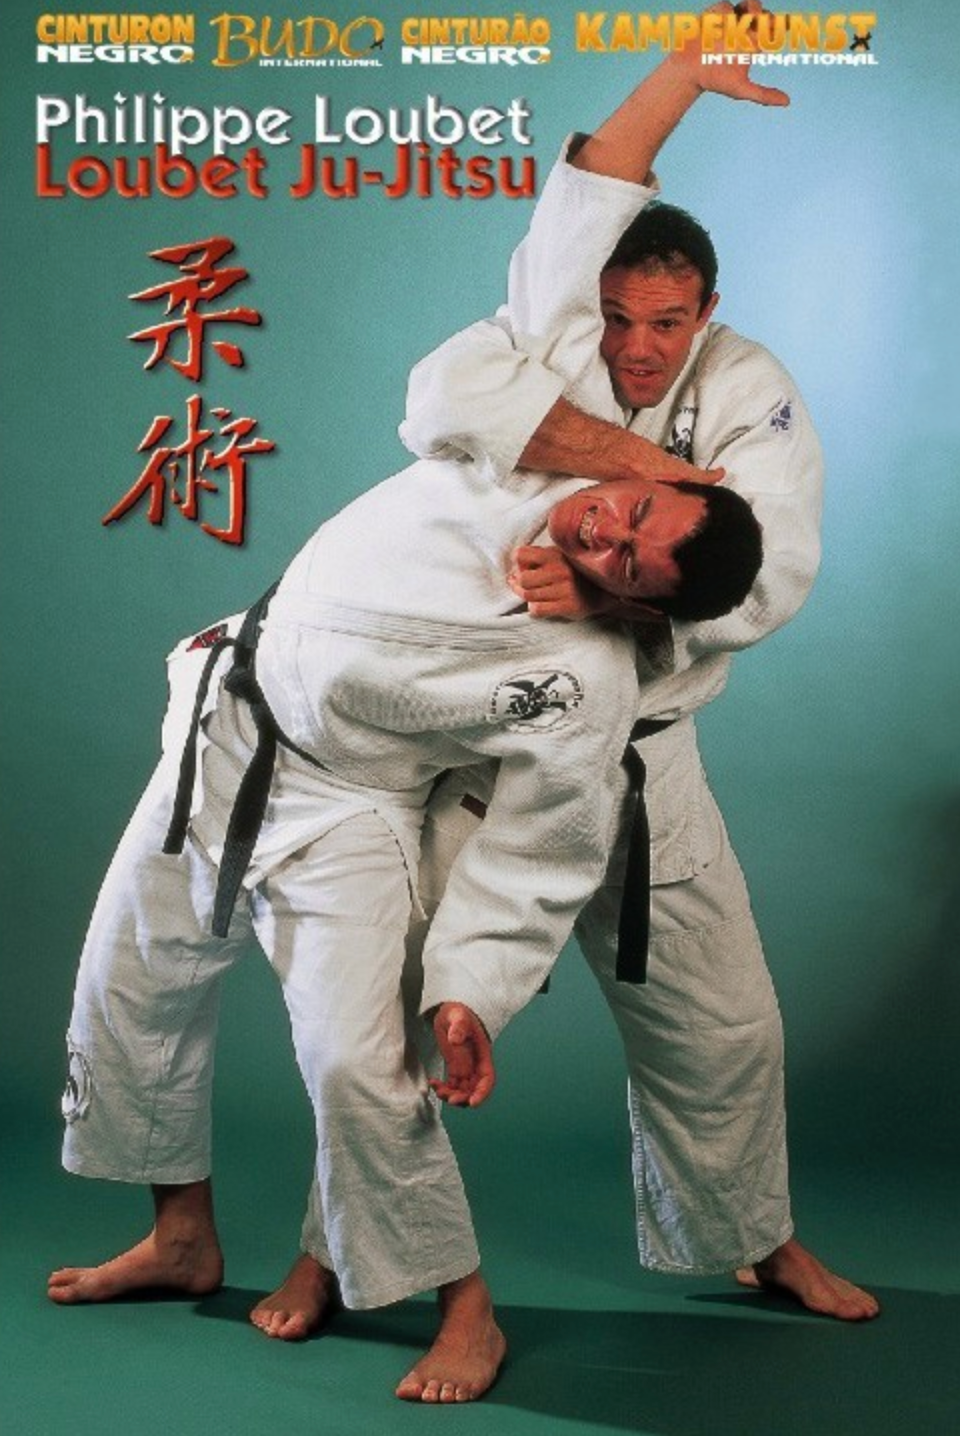 Loubet Jiu-jitsu DVD with Philippe Loubet - Budovideos Inc